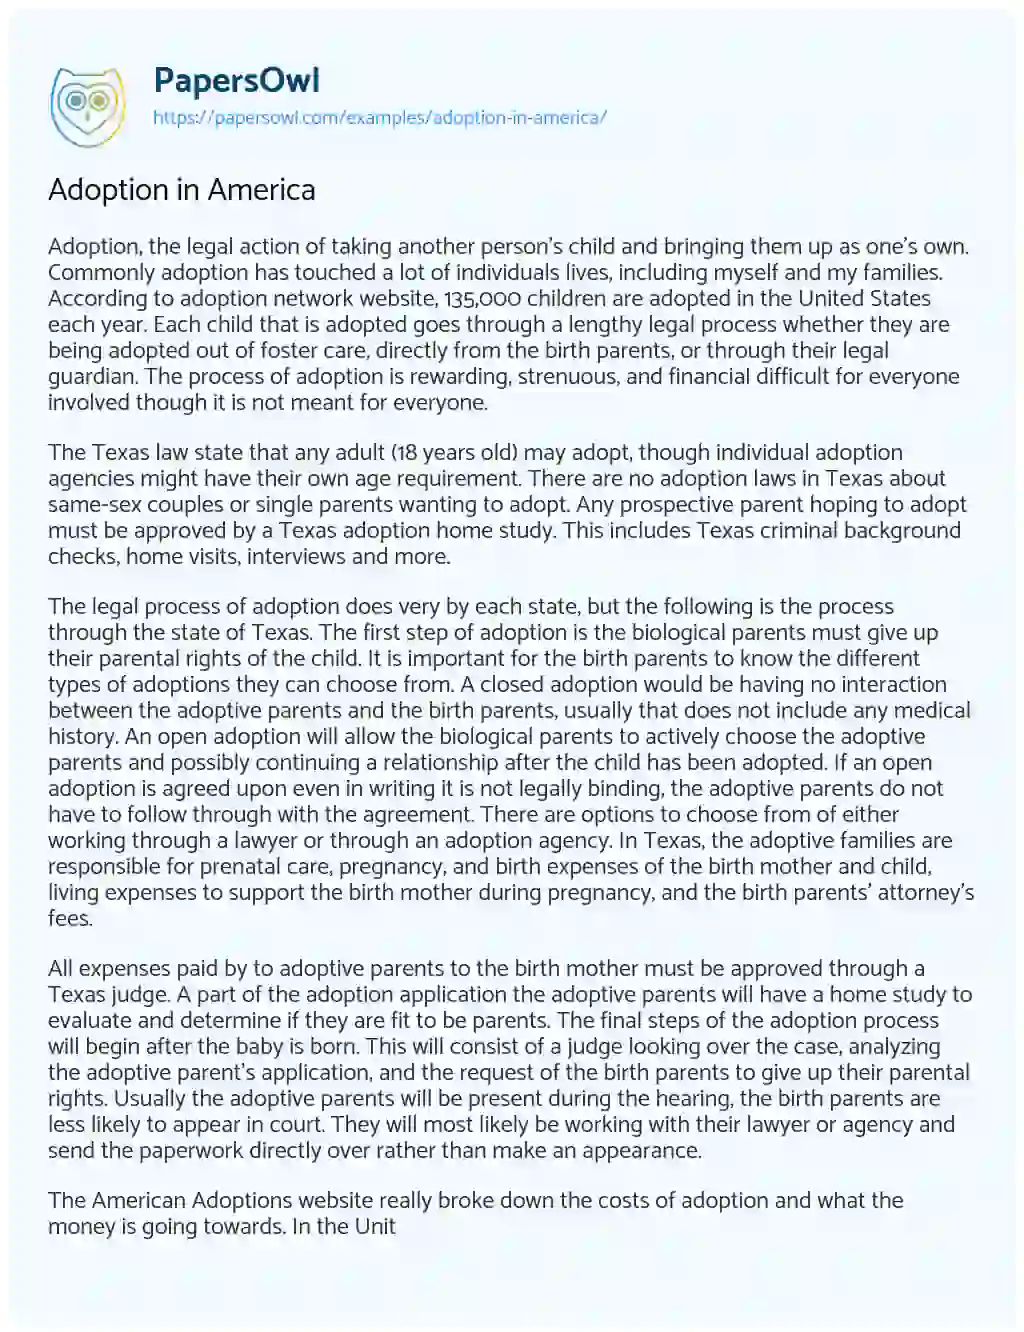 Essay on Adoption in America